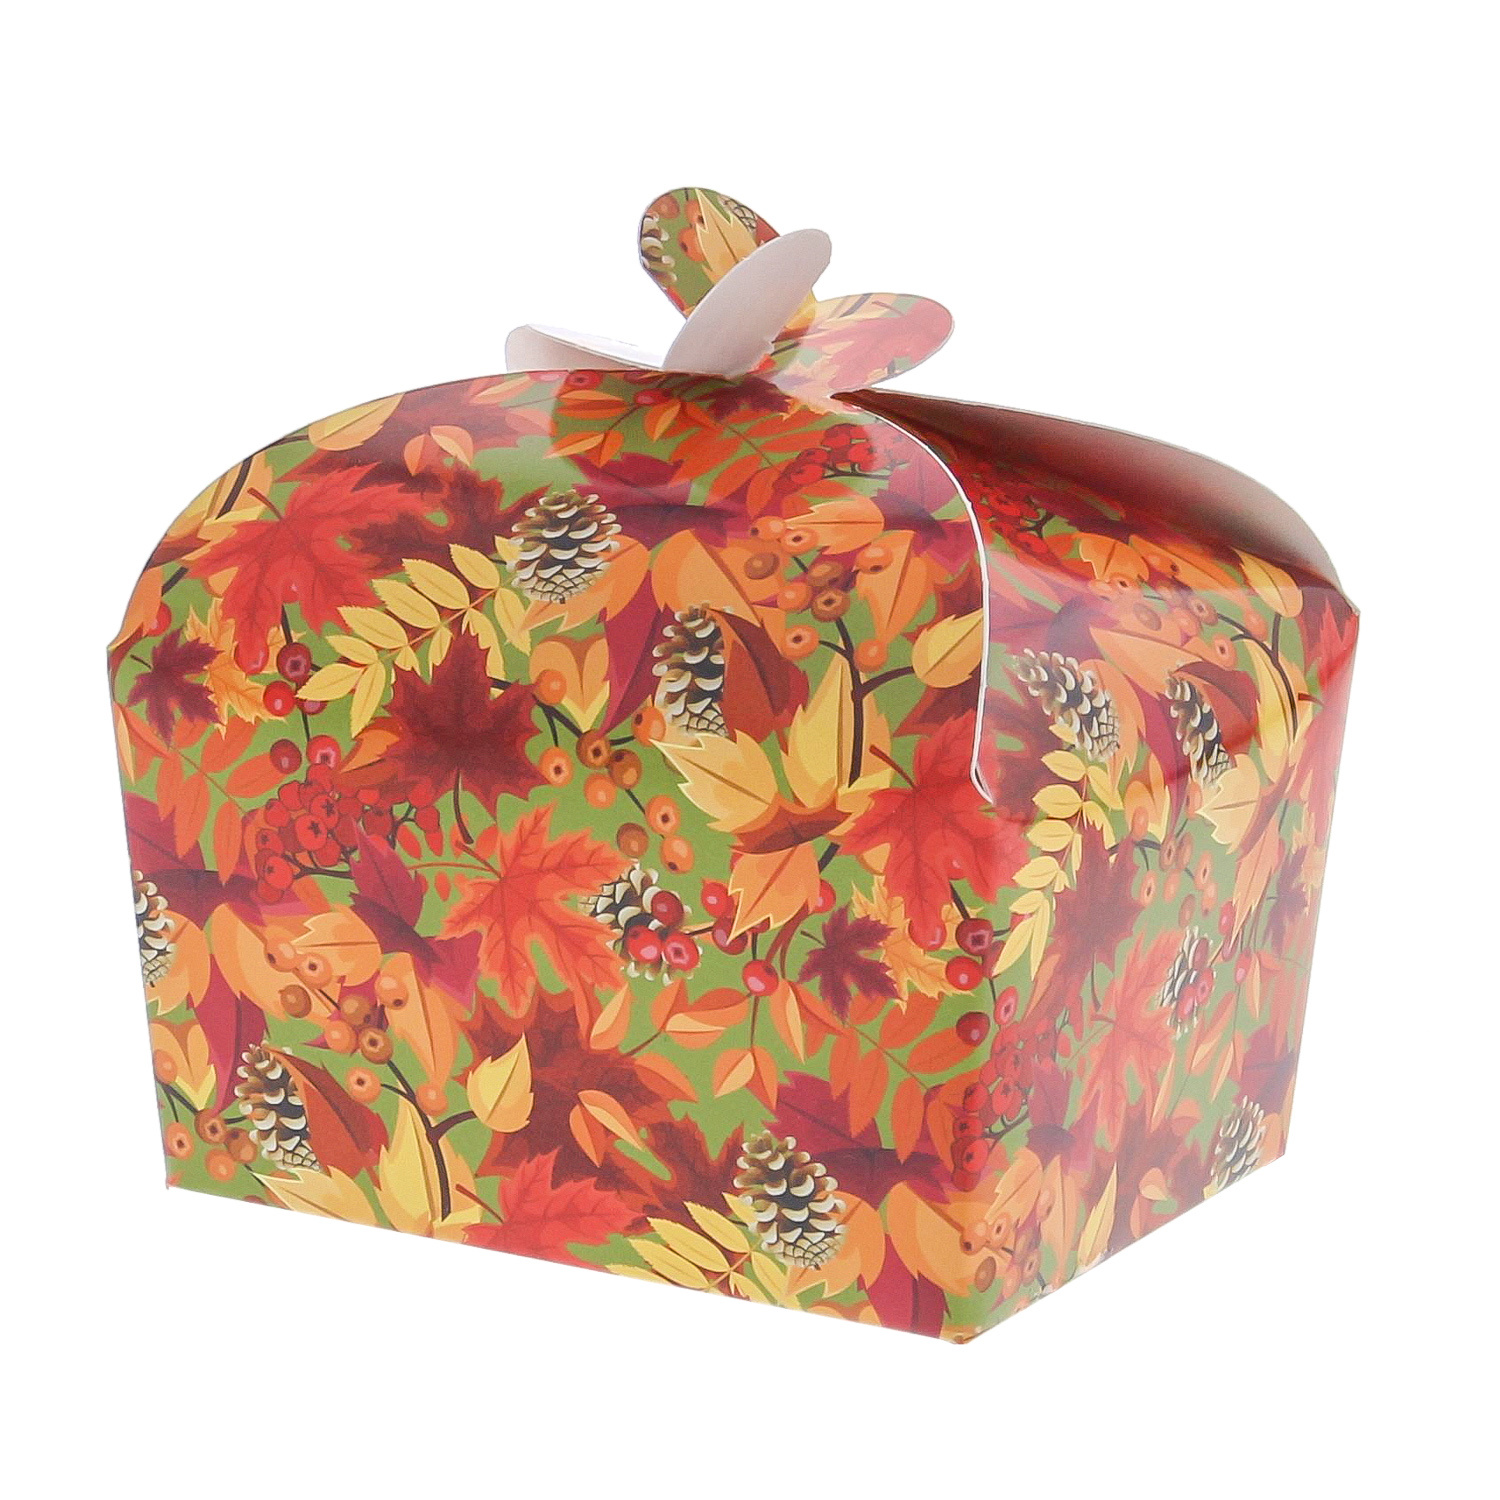 Butterfly Box "Autumn fruit" 125 - 150 gram - 48*76*60mm- 48 pieces